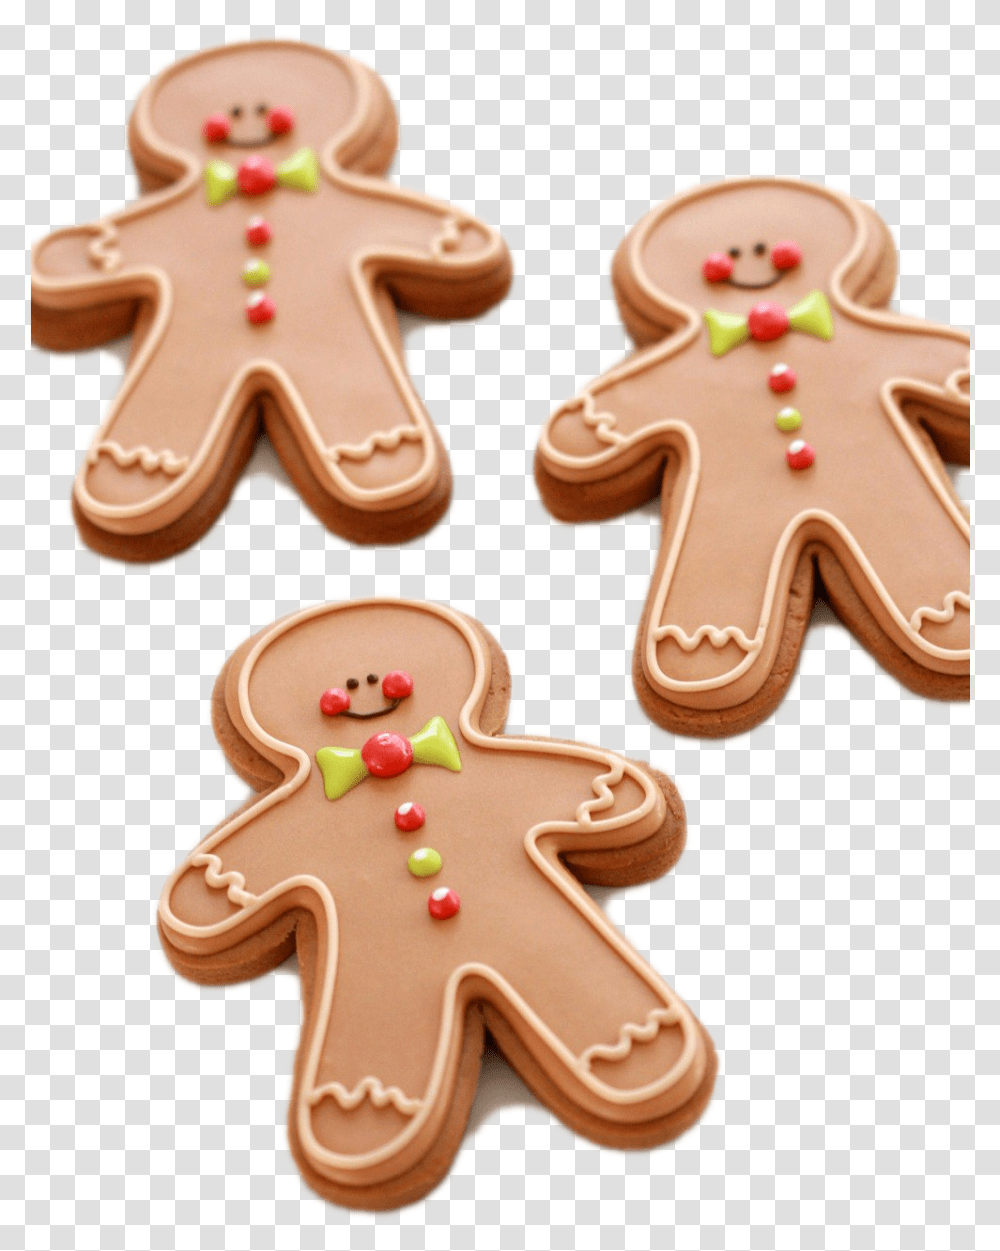 Gingerbread Man Download Image Gingerbread, Cookie, Food, Biscuit, Birthday Cake Transparent Png